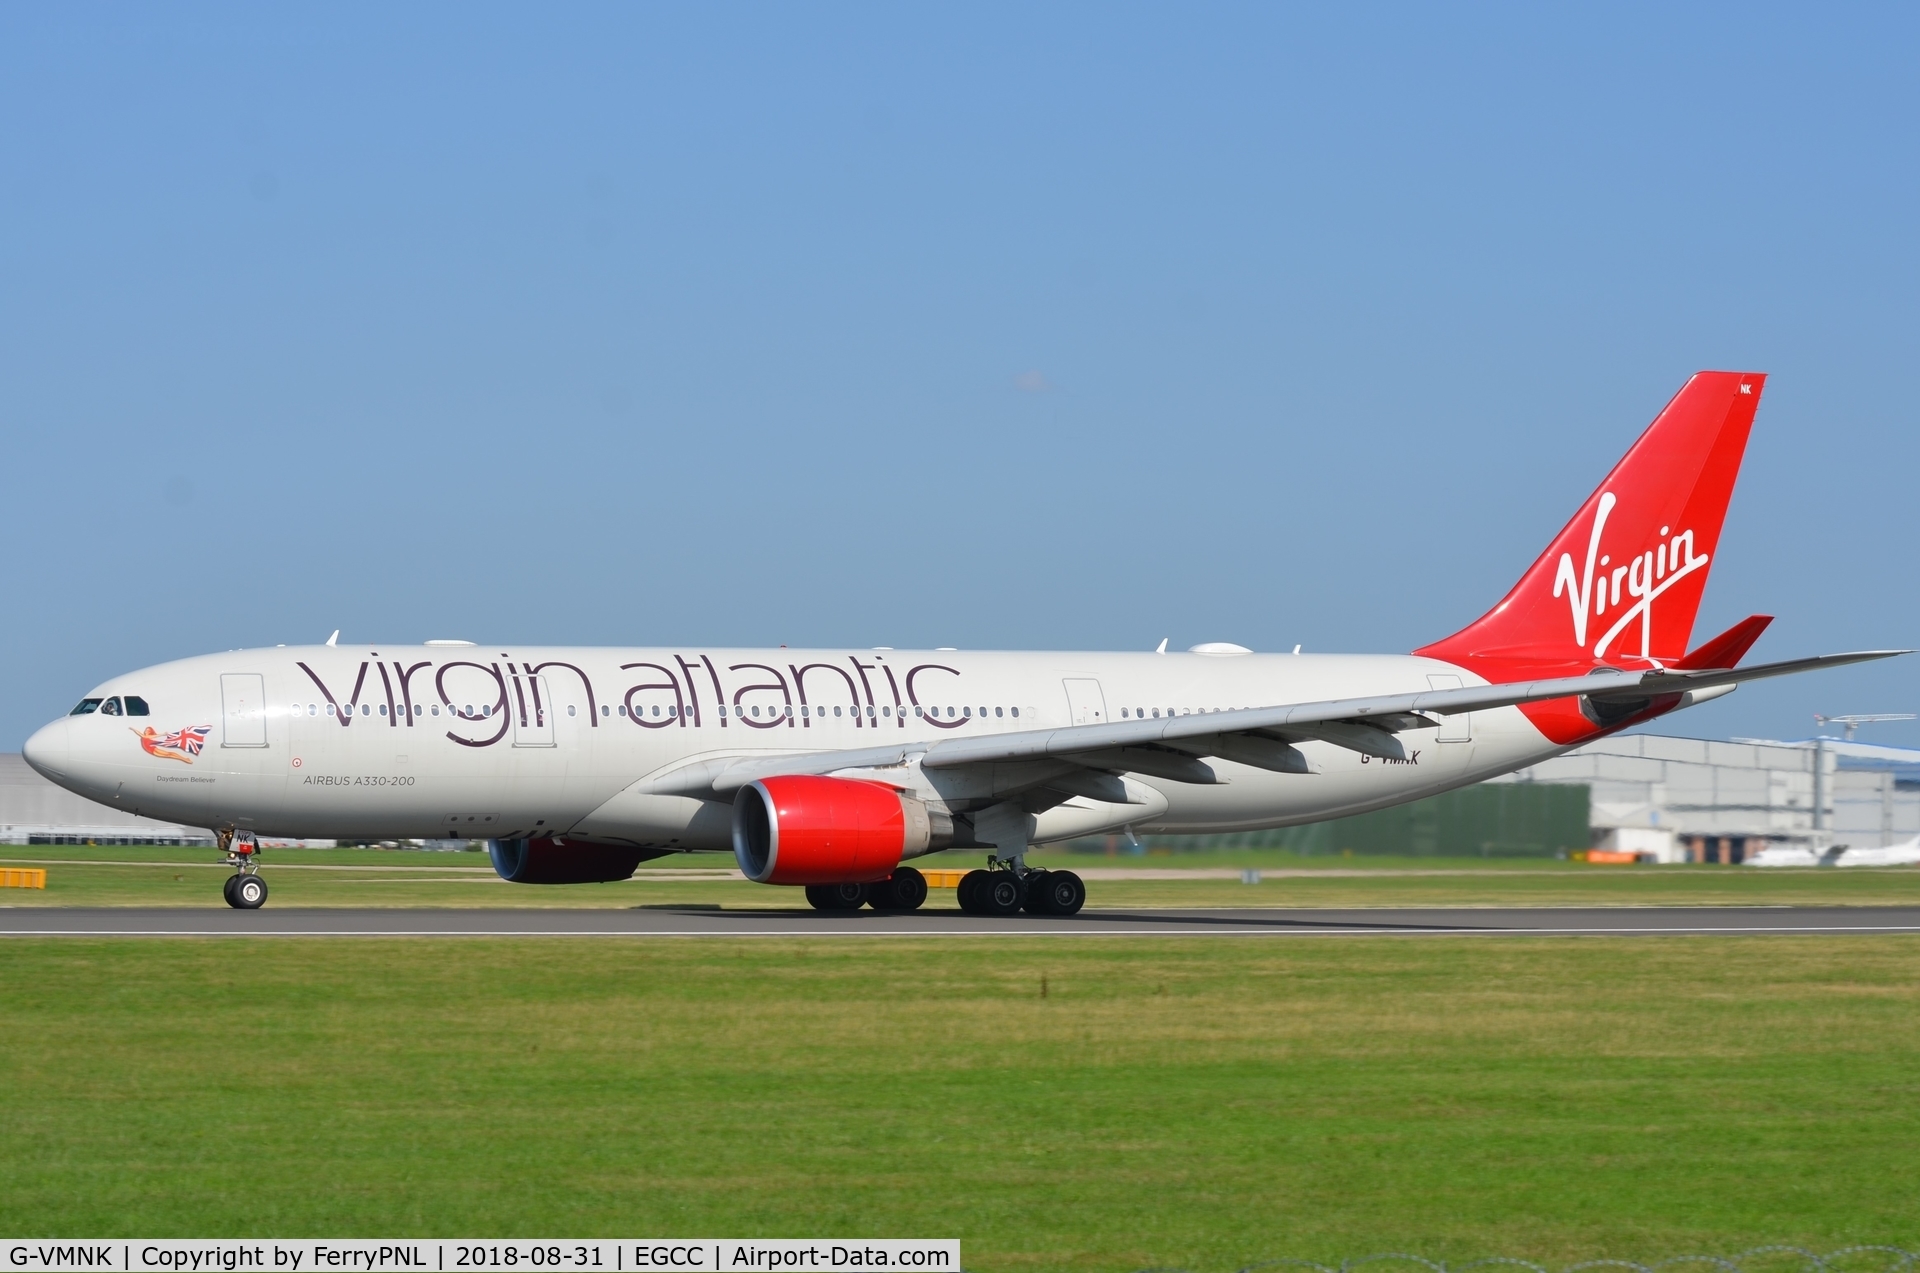 G-VMNK, 2001 Airbus A330-223 C/N 403, Former Air Berlin D-ALPA now operating for Virgin.